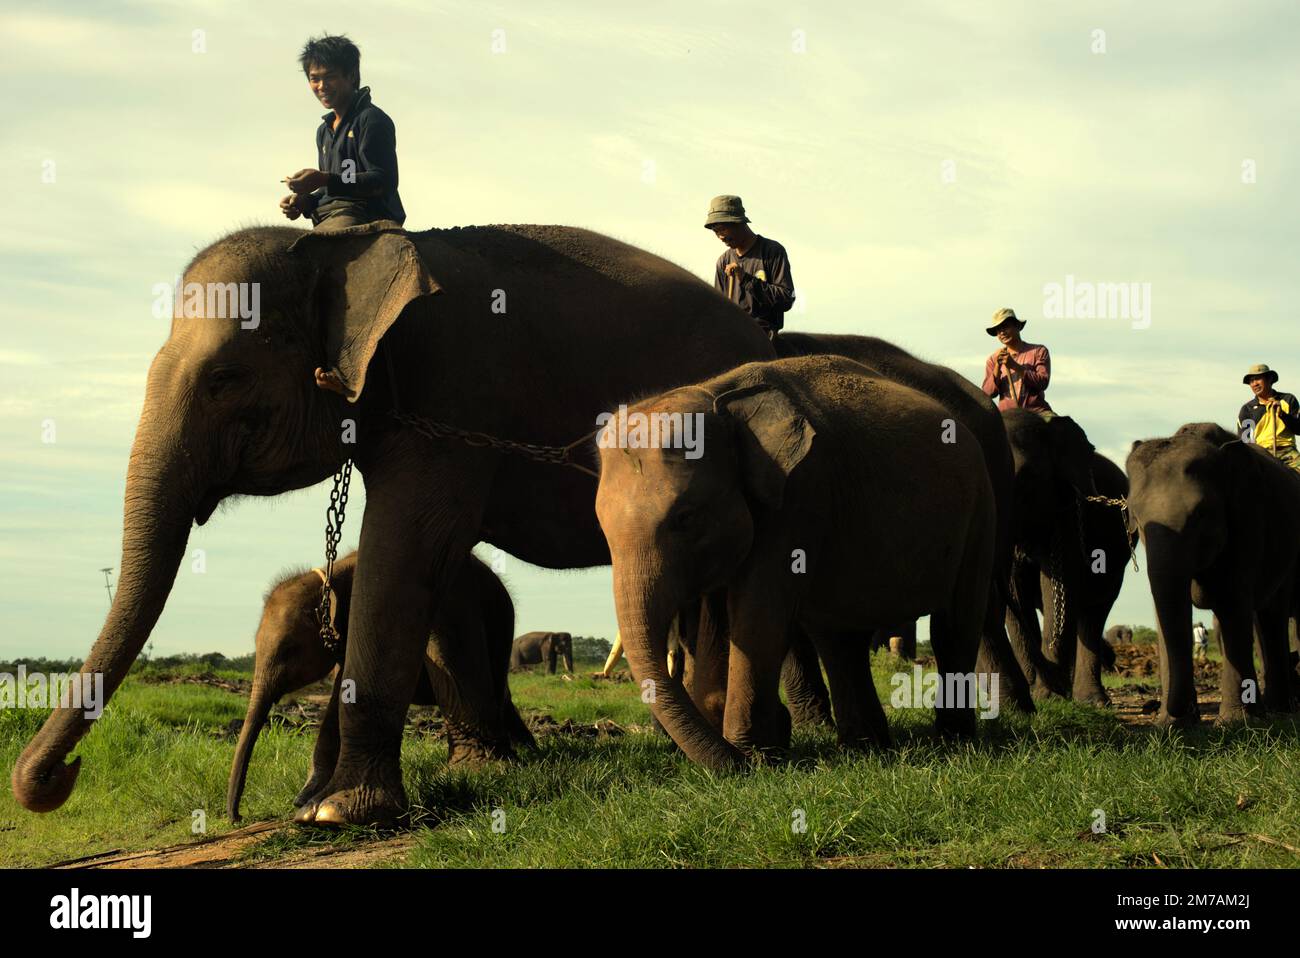 Mahouts, also national park rangers, are riding Sumatran elephants in Way Kambas National Park, Lampung, Indonesia. Stock Photo